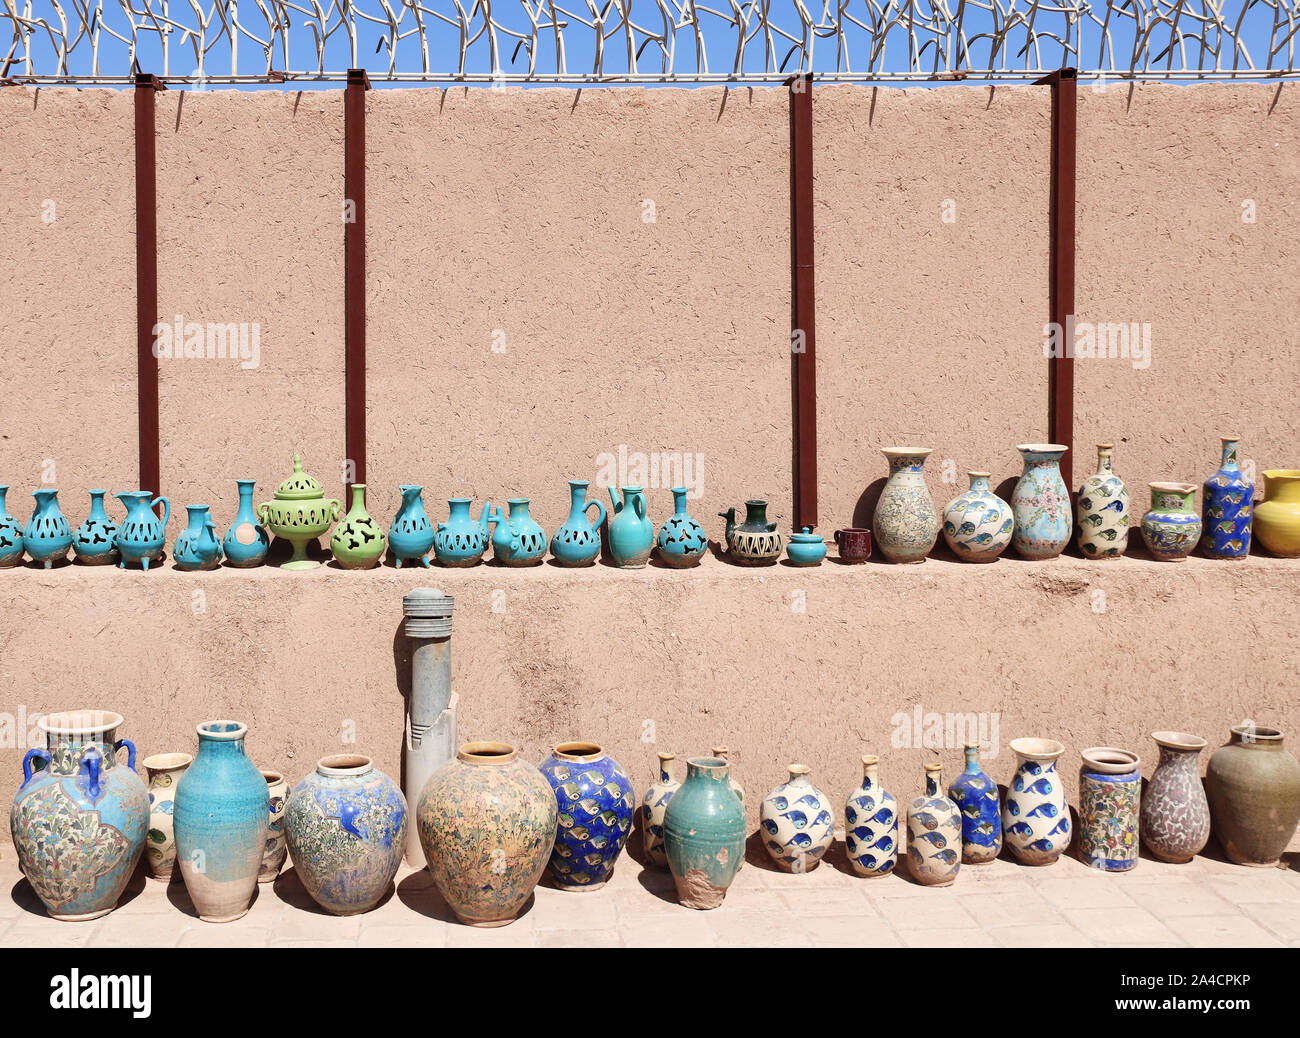 Traditional iranian souvenirs - colorful clay pots and jugs, Yazd, Iran Stock Photo